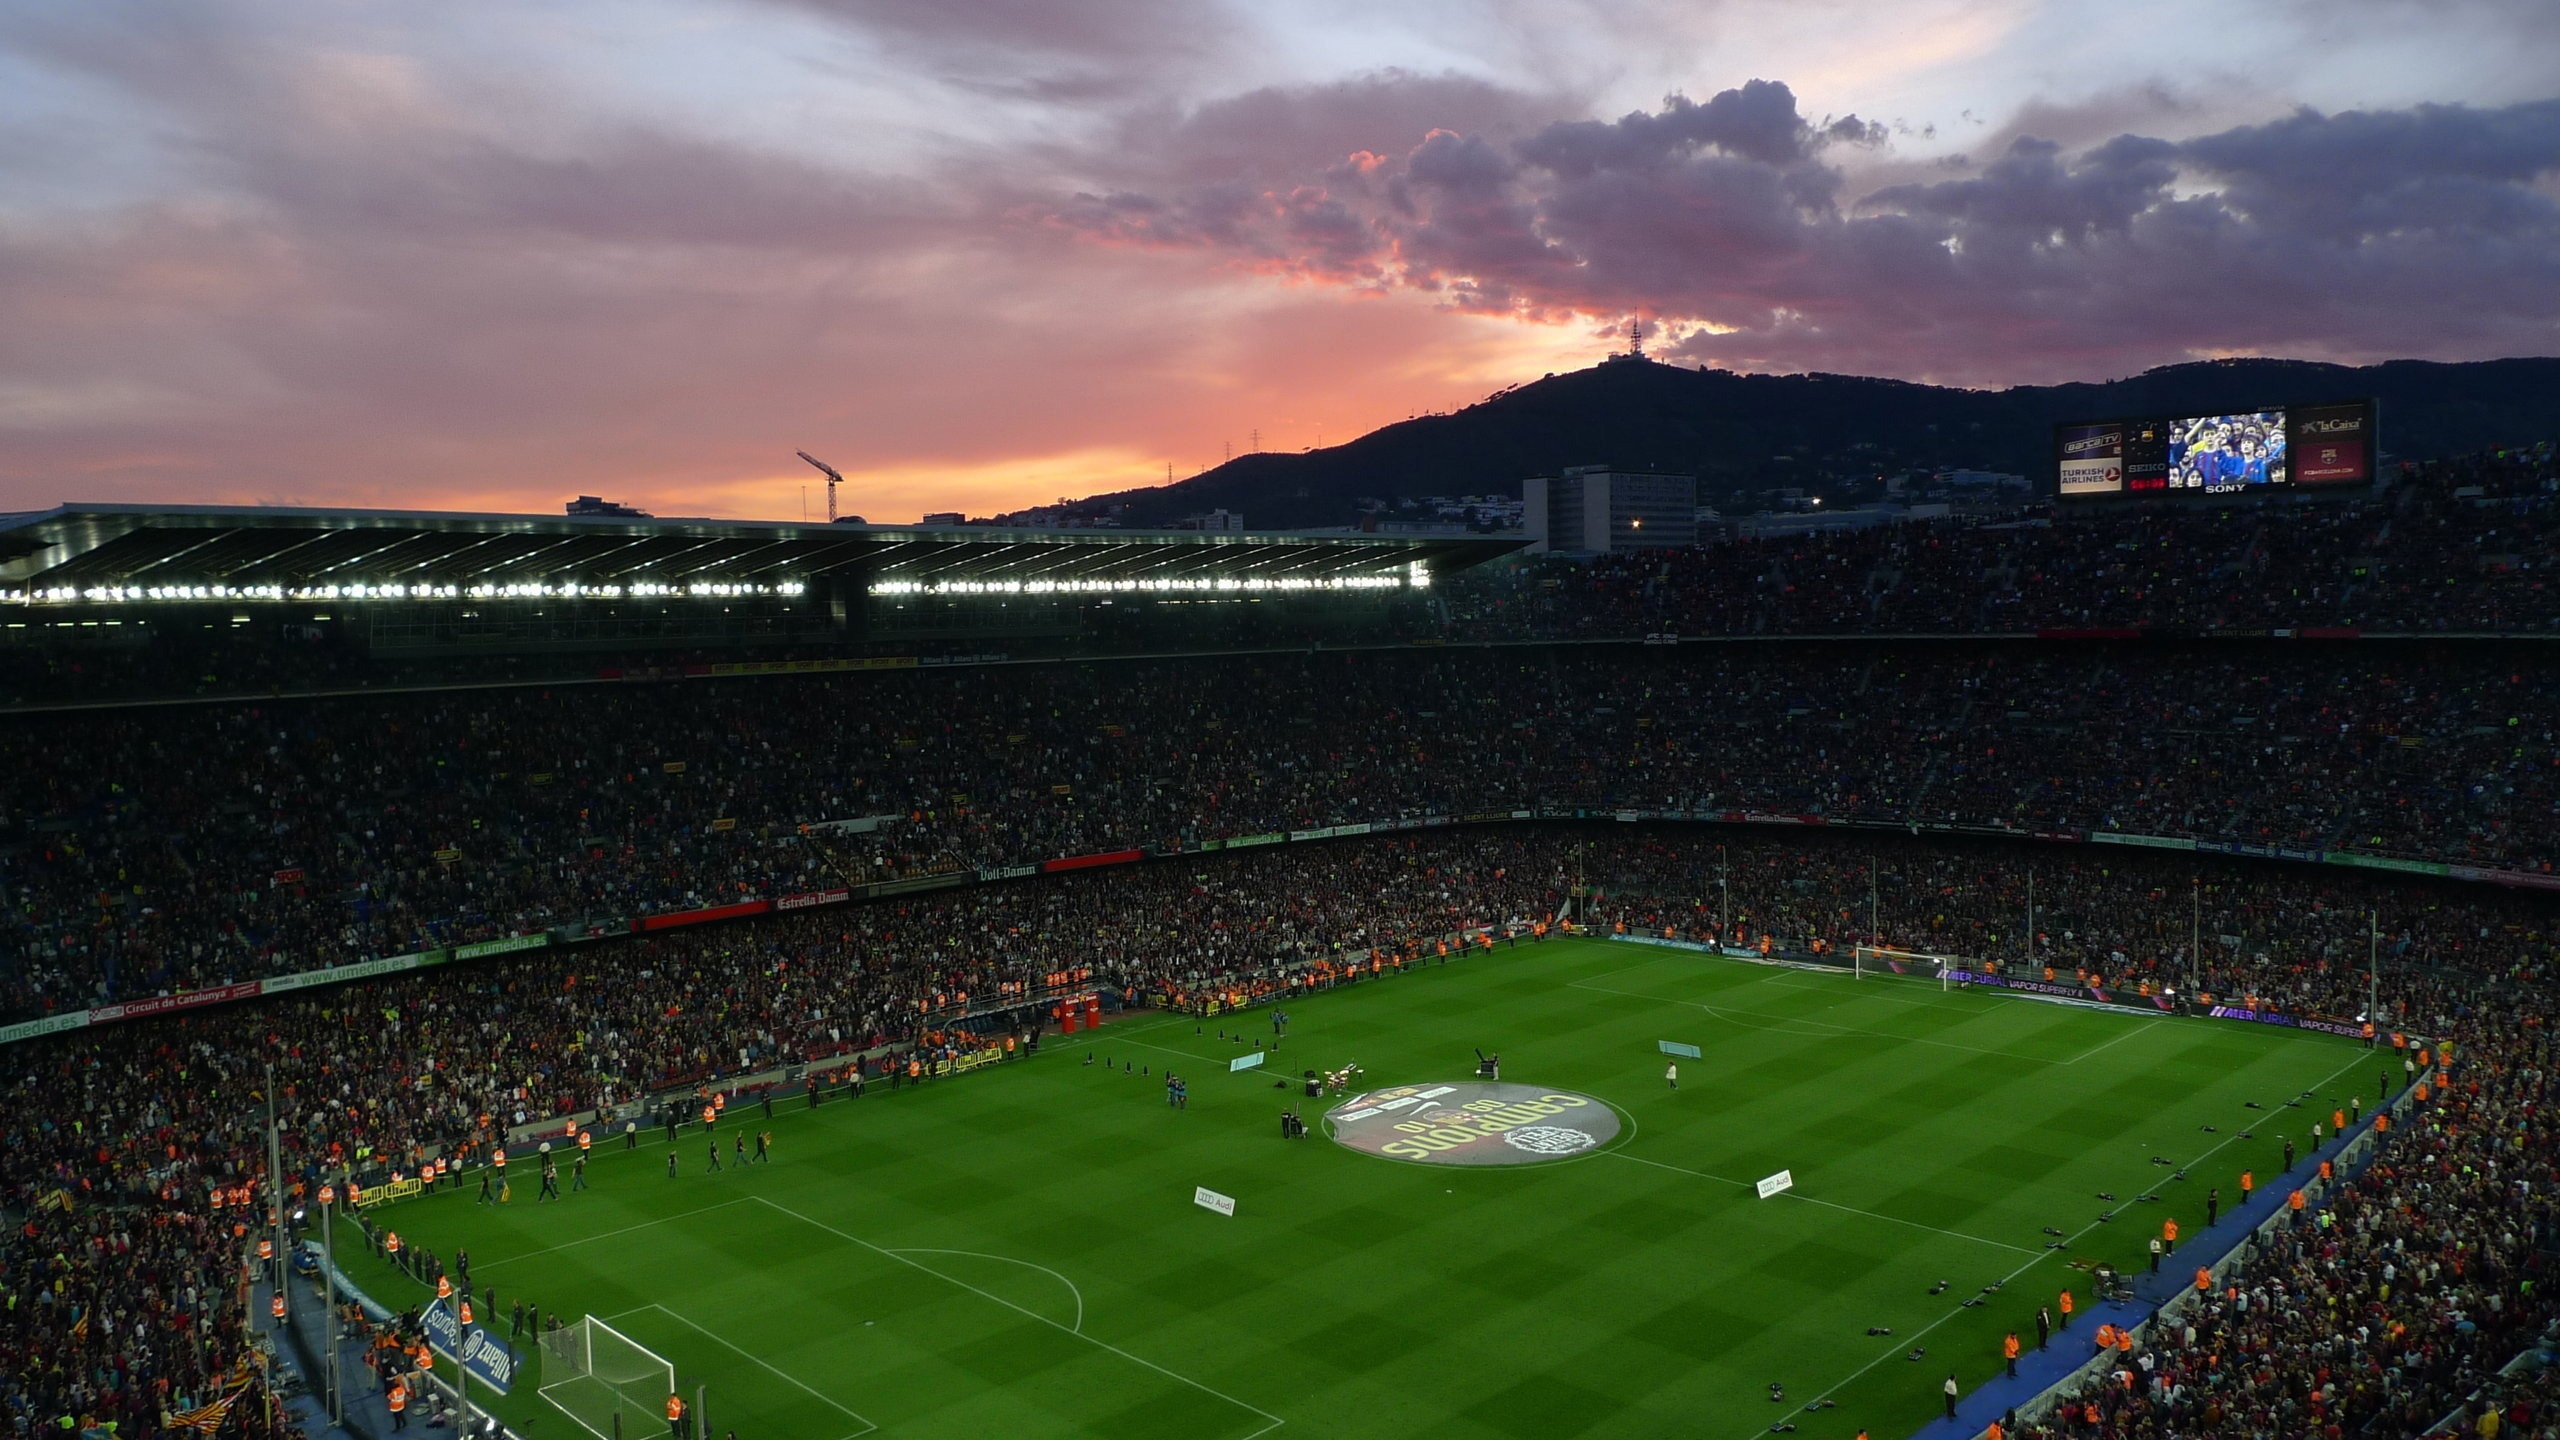 Camp Nou Stadium for 2560x1440 HDTV resolution